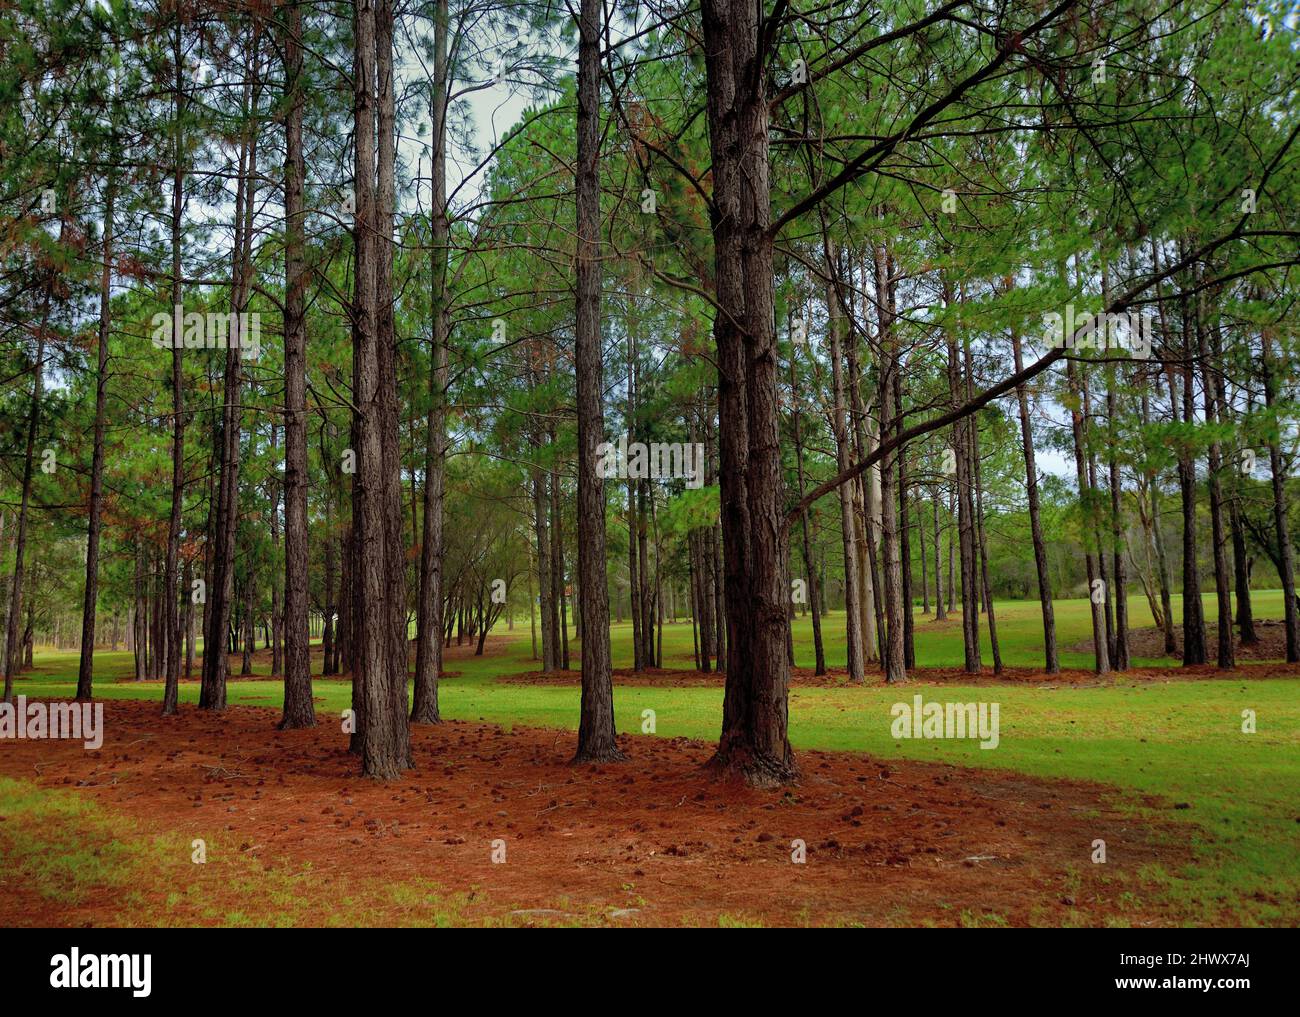 Arrays of pine trees, Australia Stock Photo